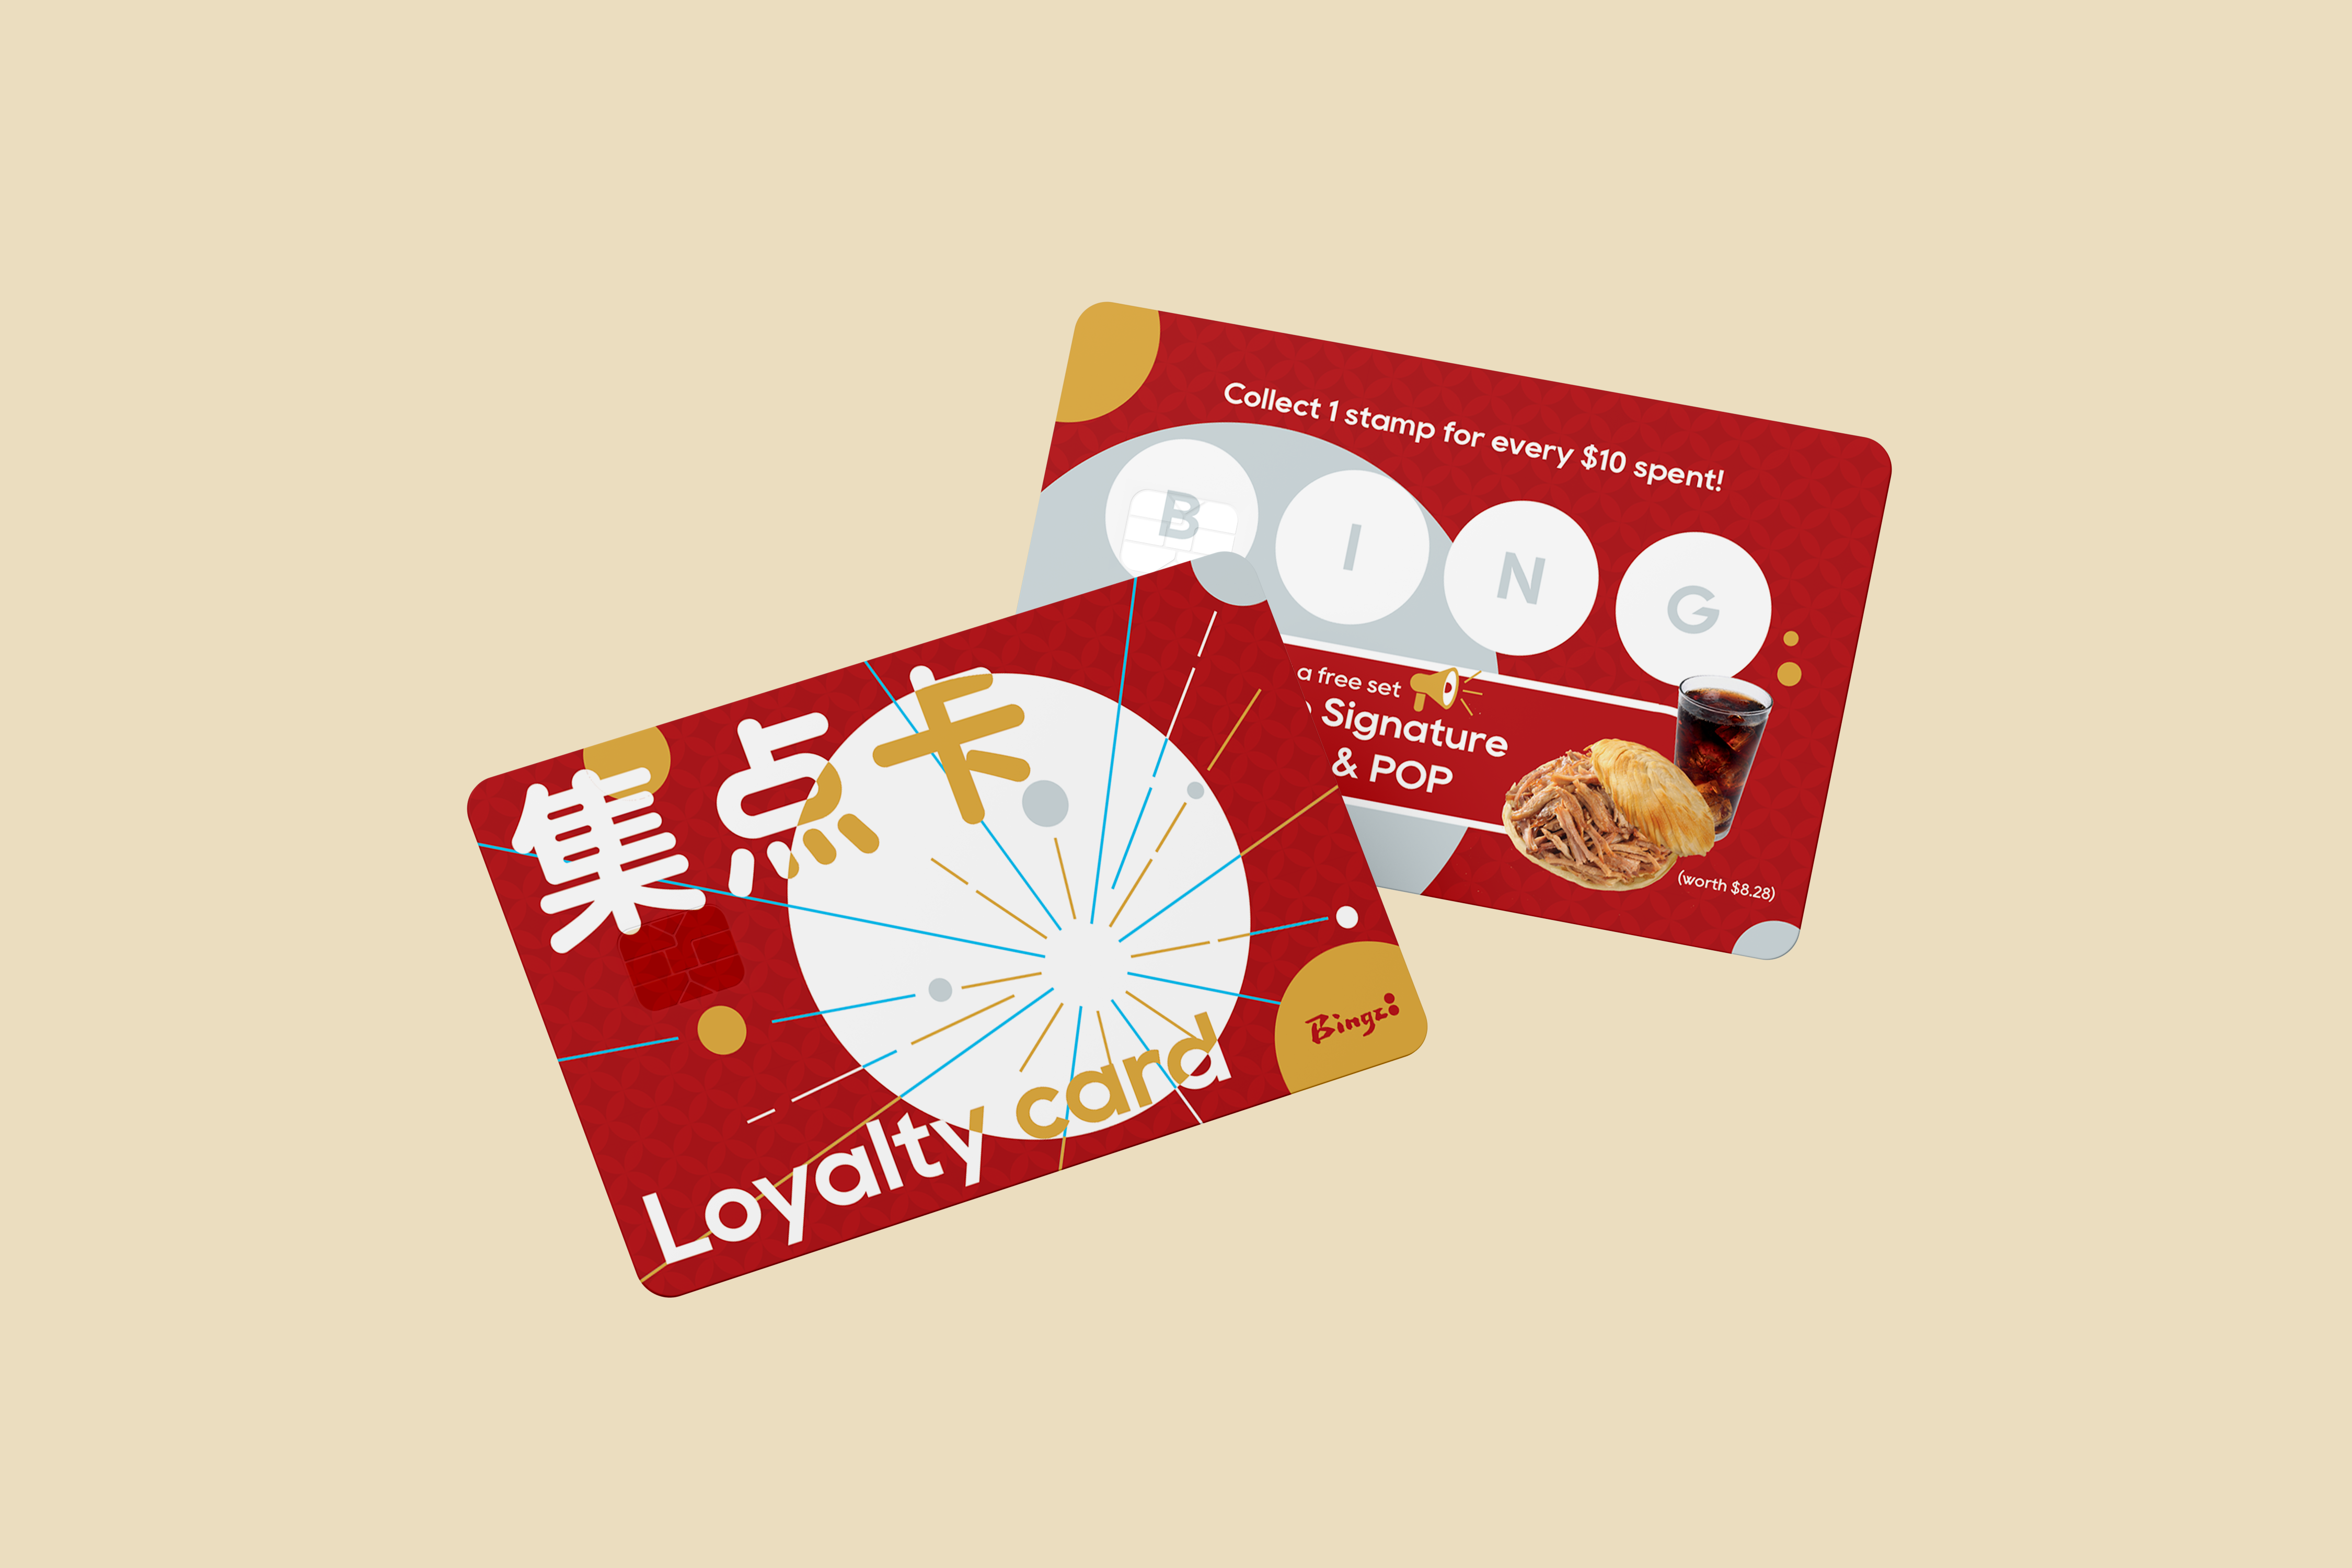 Bingz Loyalty Card